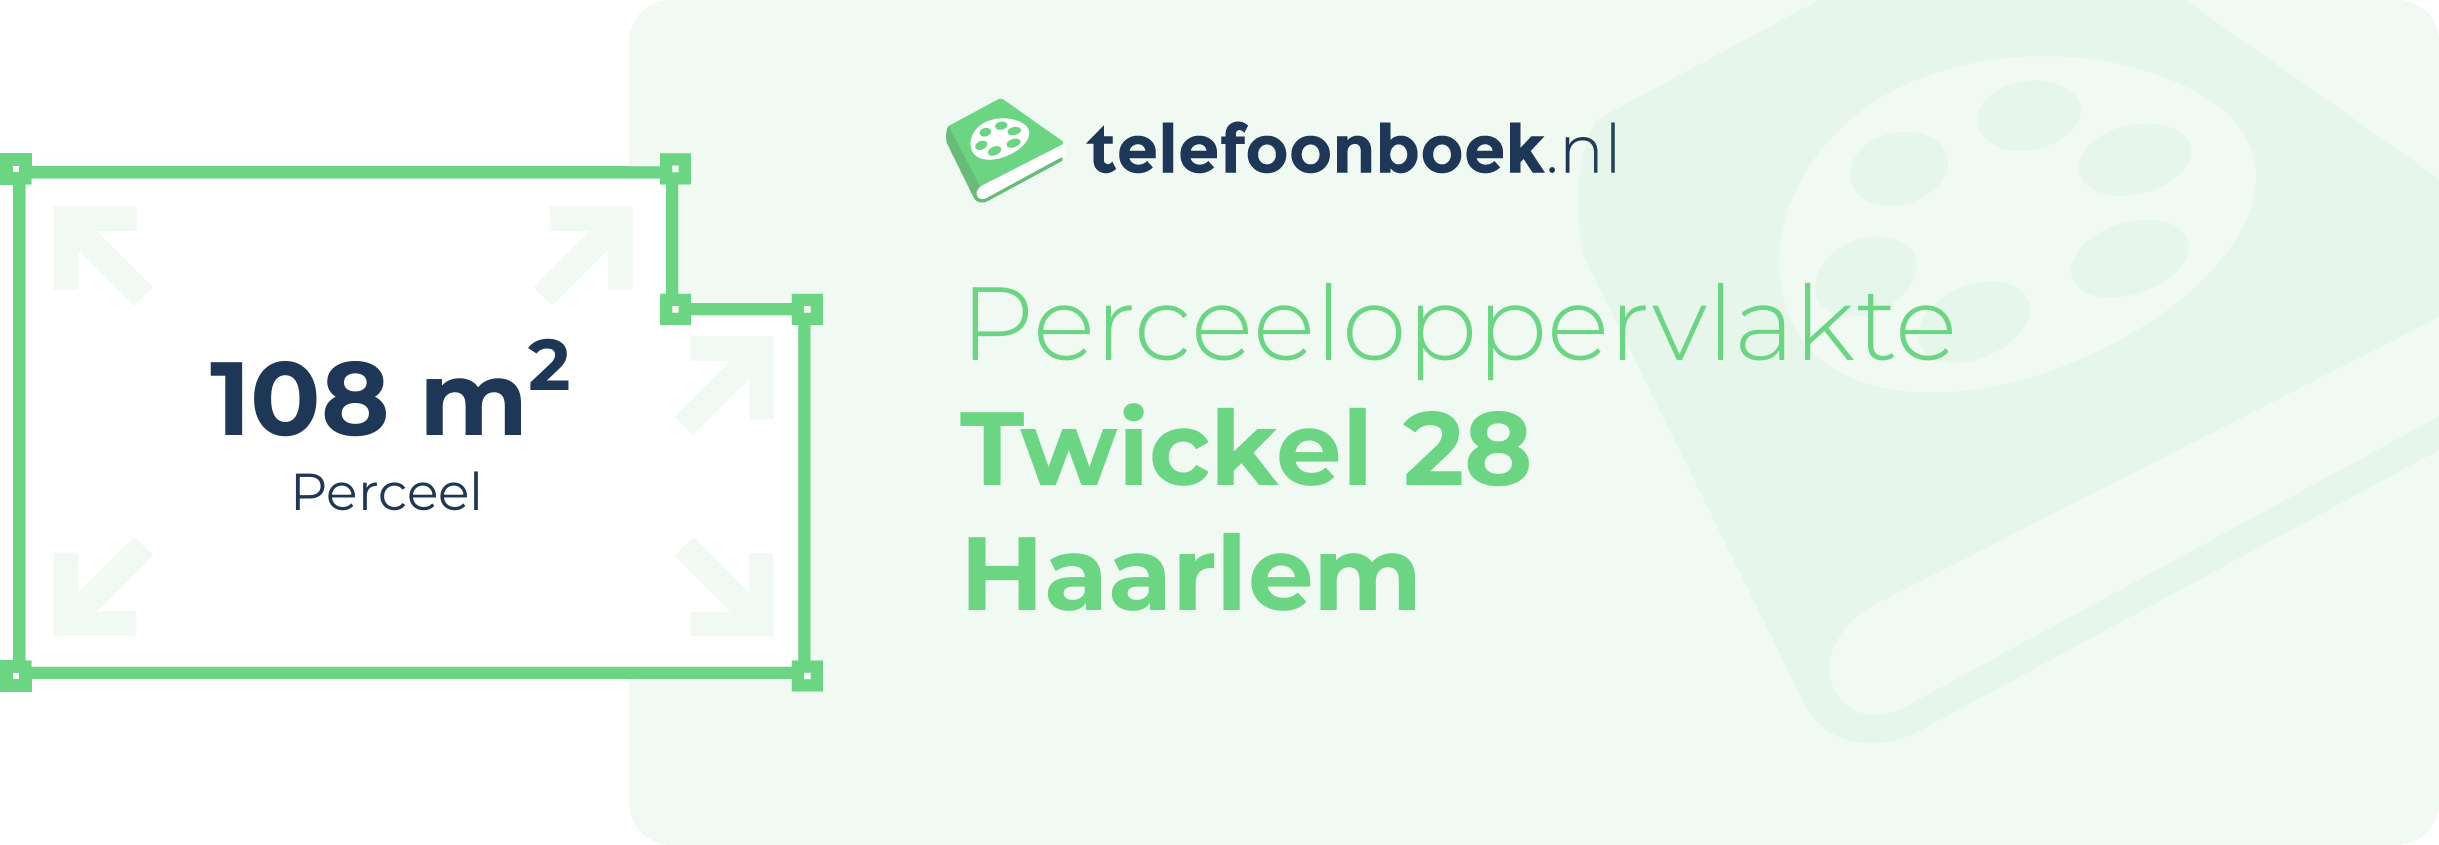 Perceeloppervlakte Twickel 28 Haarlem